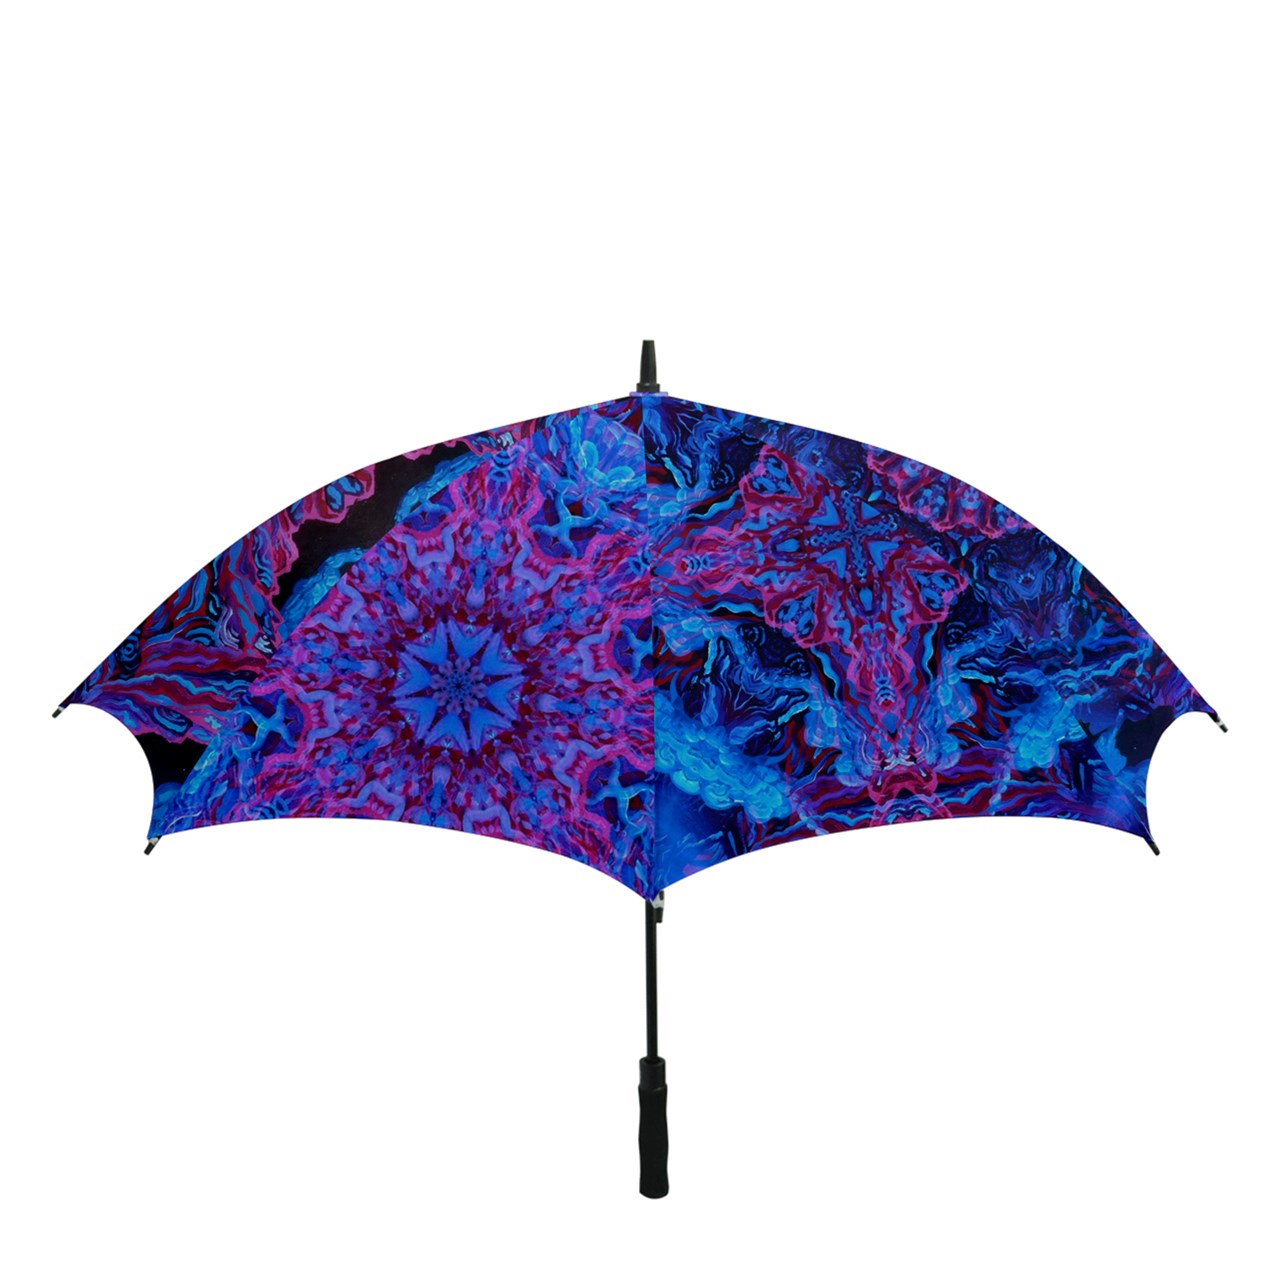 Goodtimes Festival XL 51 Inch Umbrella / Parasol